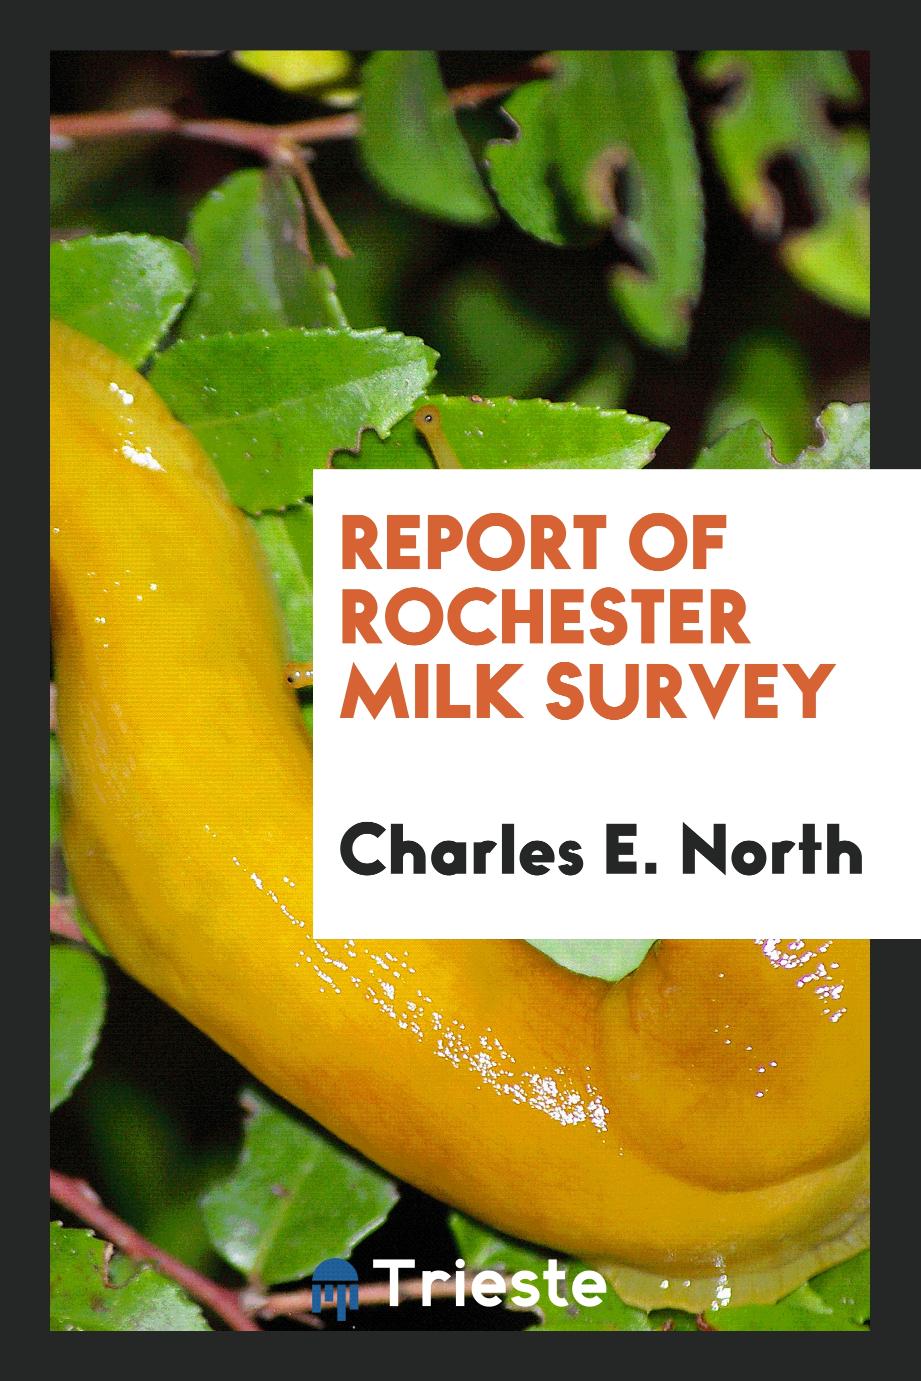 Report of Rochester milk survey